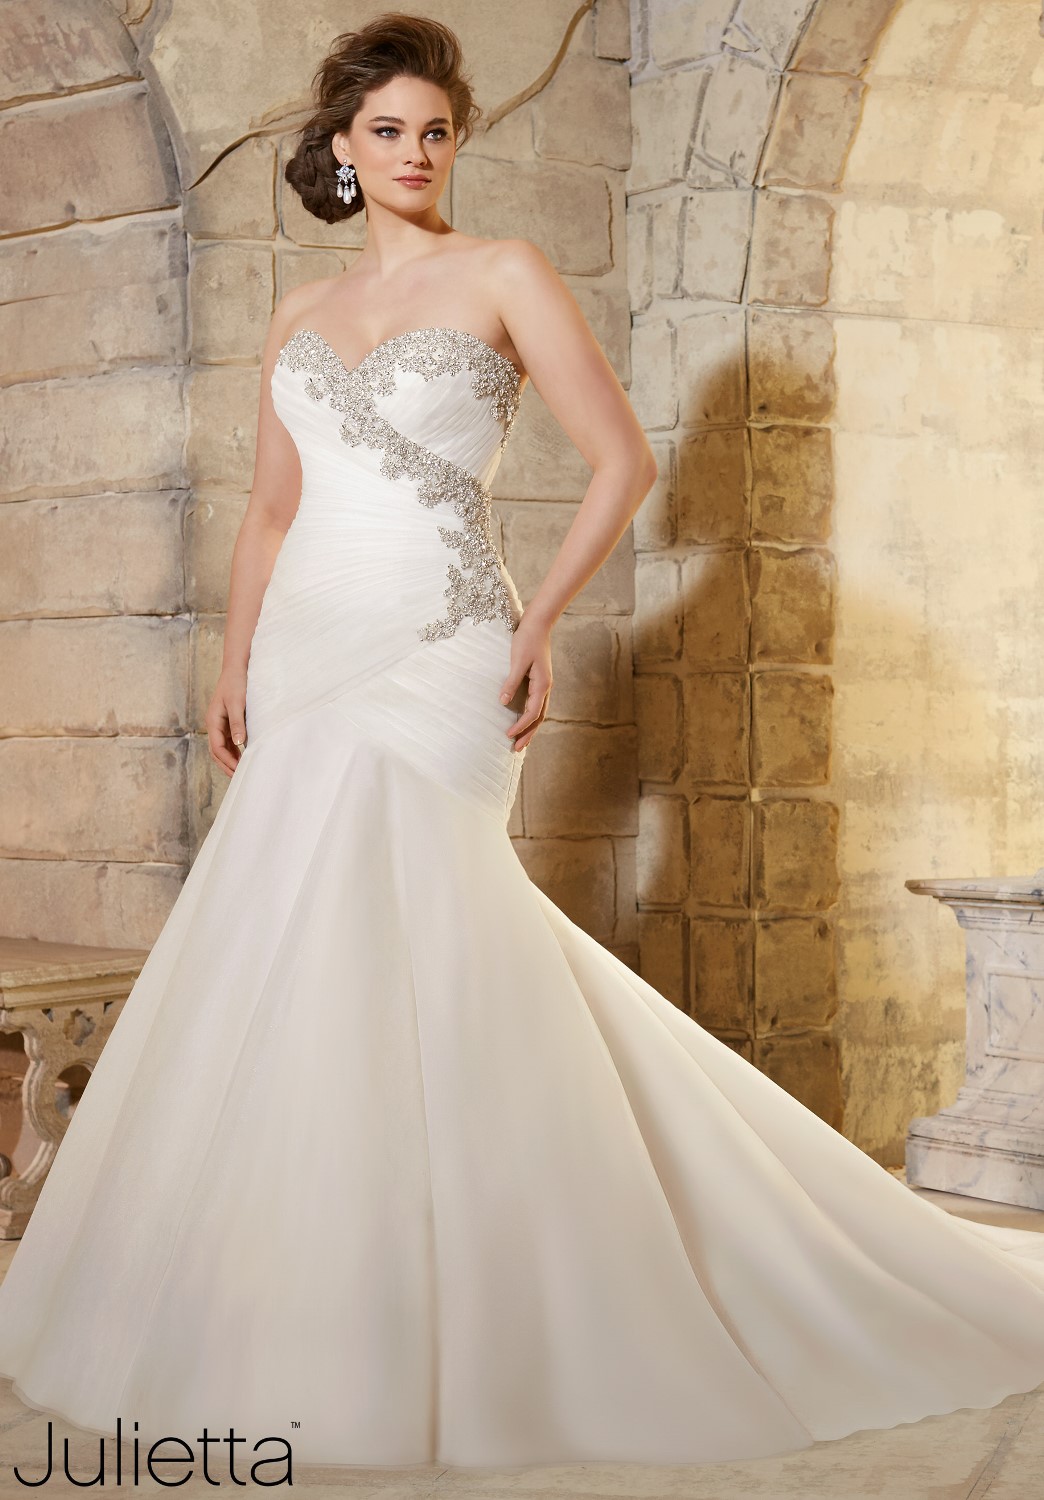 Wedding Dress - Mori Lee Julietta FALL 2015 Collection: 3187 - Crystal ...